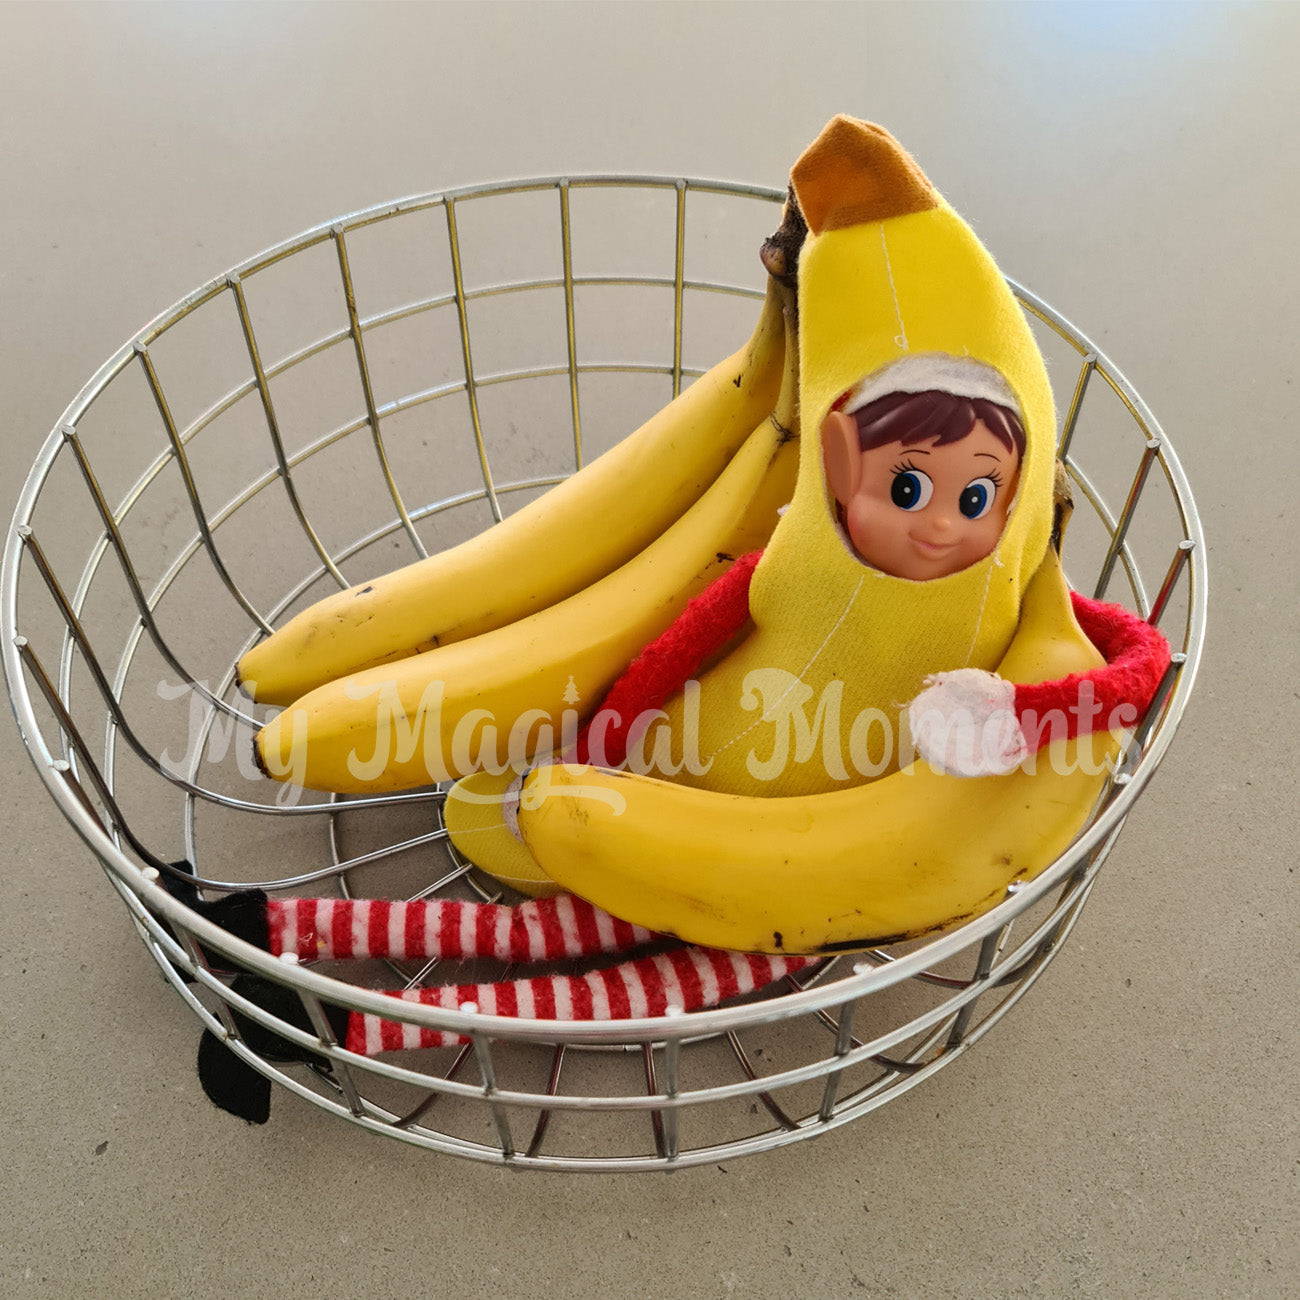 Elves behavin badly wearing a banana costume hiding in a bowl of fruit